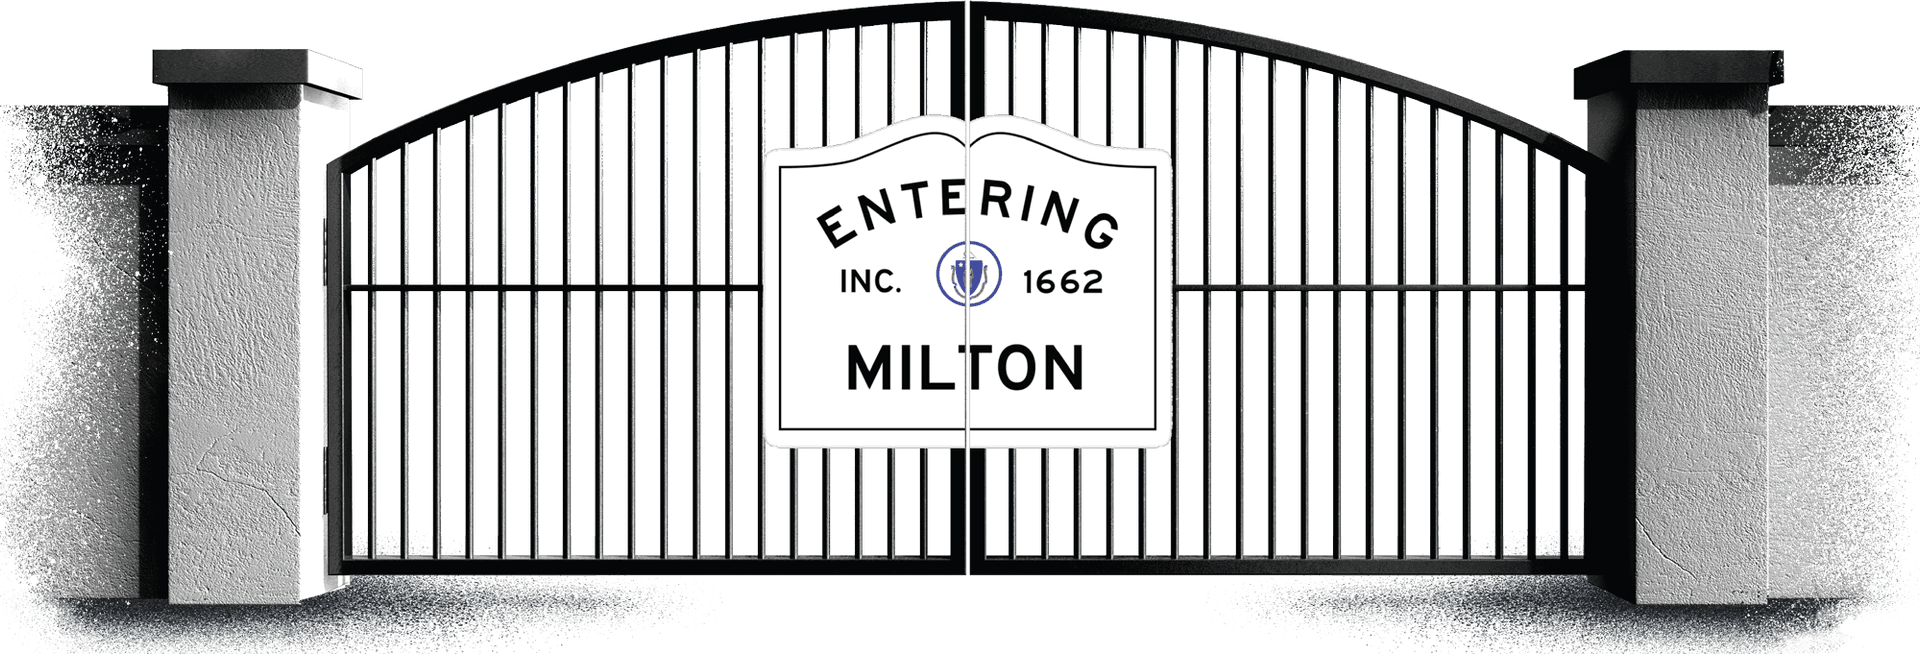 Entering Milton